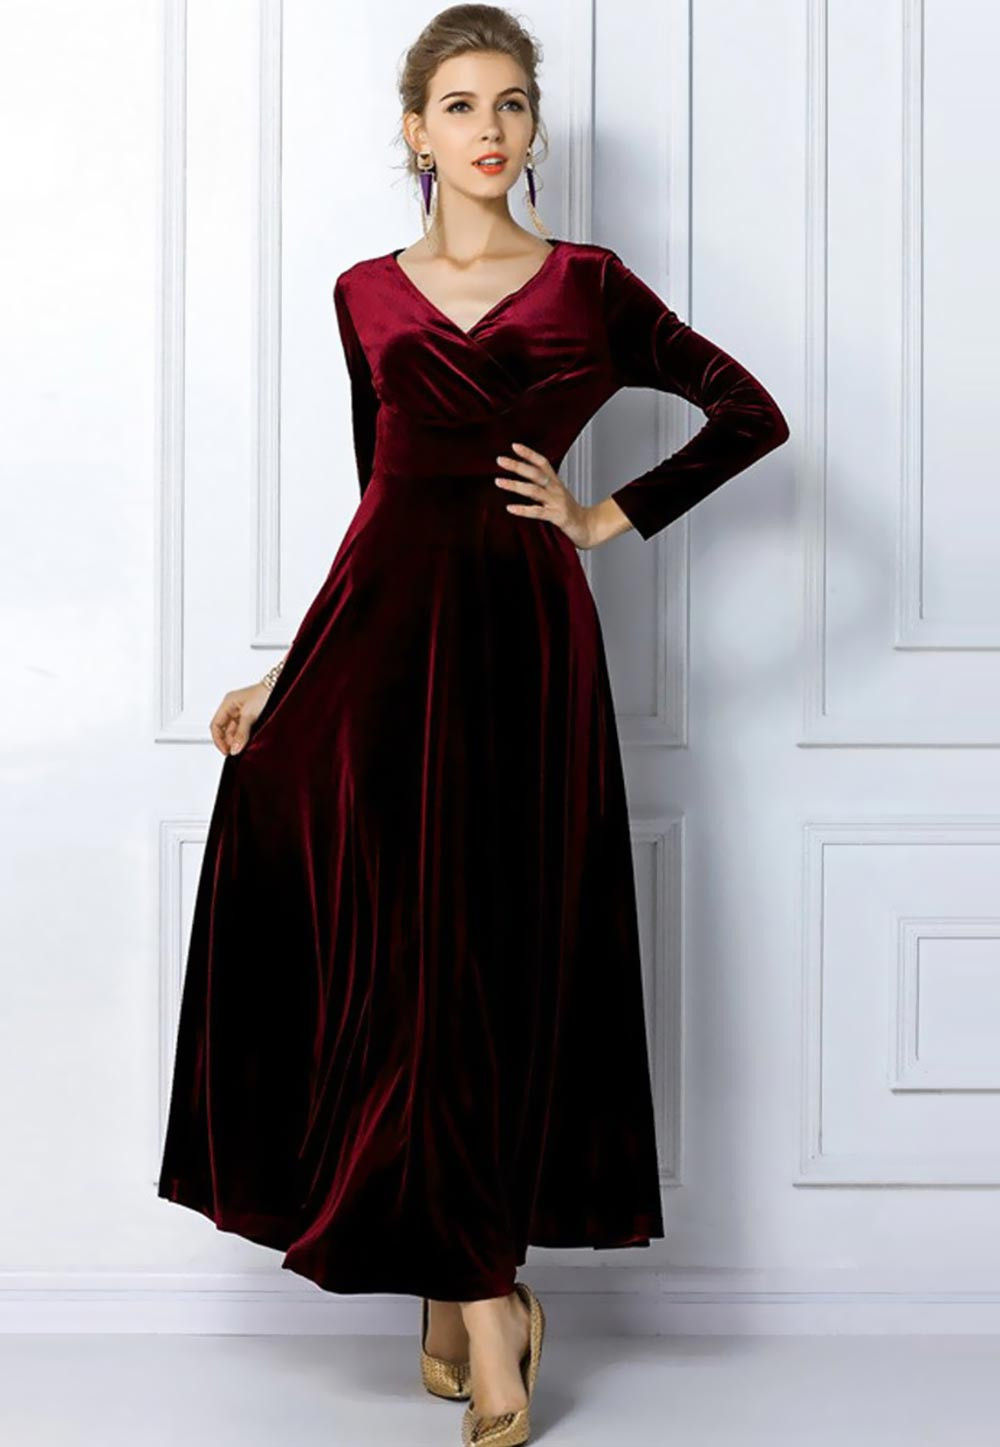 ASHLEYlauren - Velvet Gown with Shoulder Ruffle Details | ASHLEYlauren-mncb.edu.vn